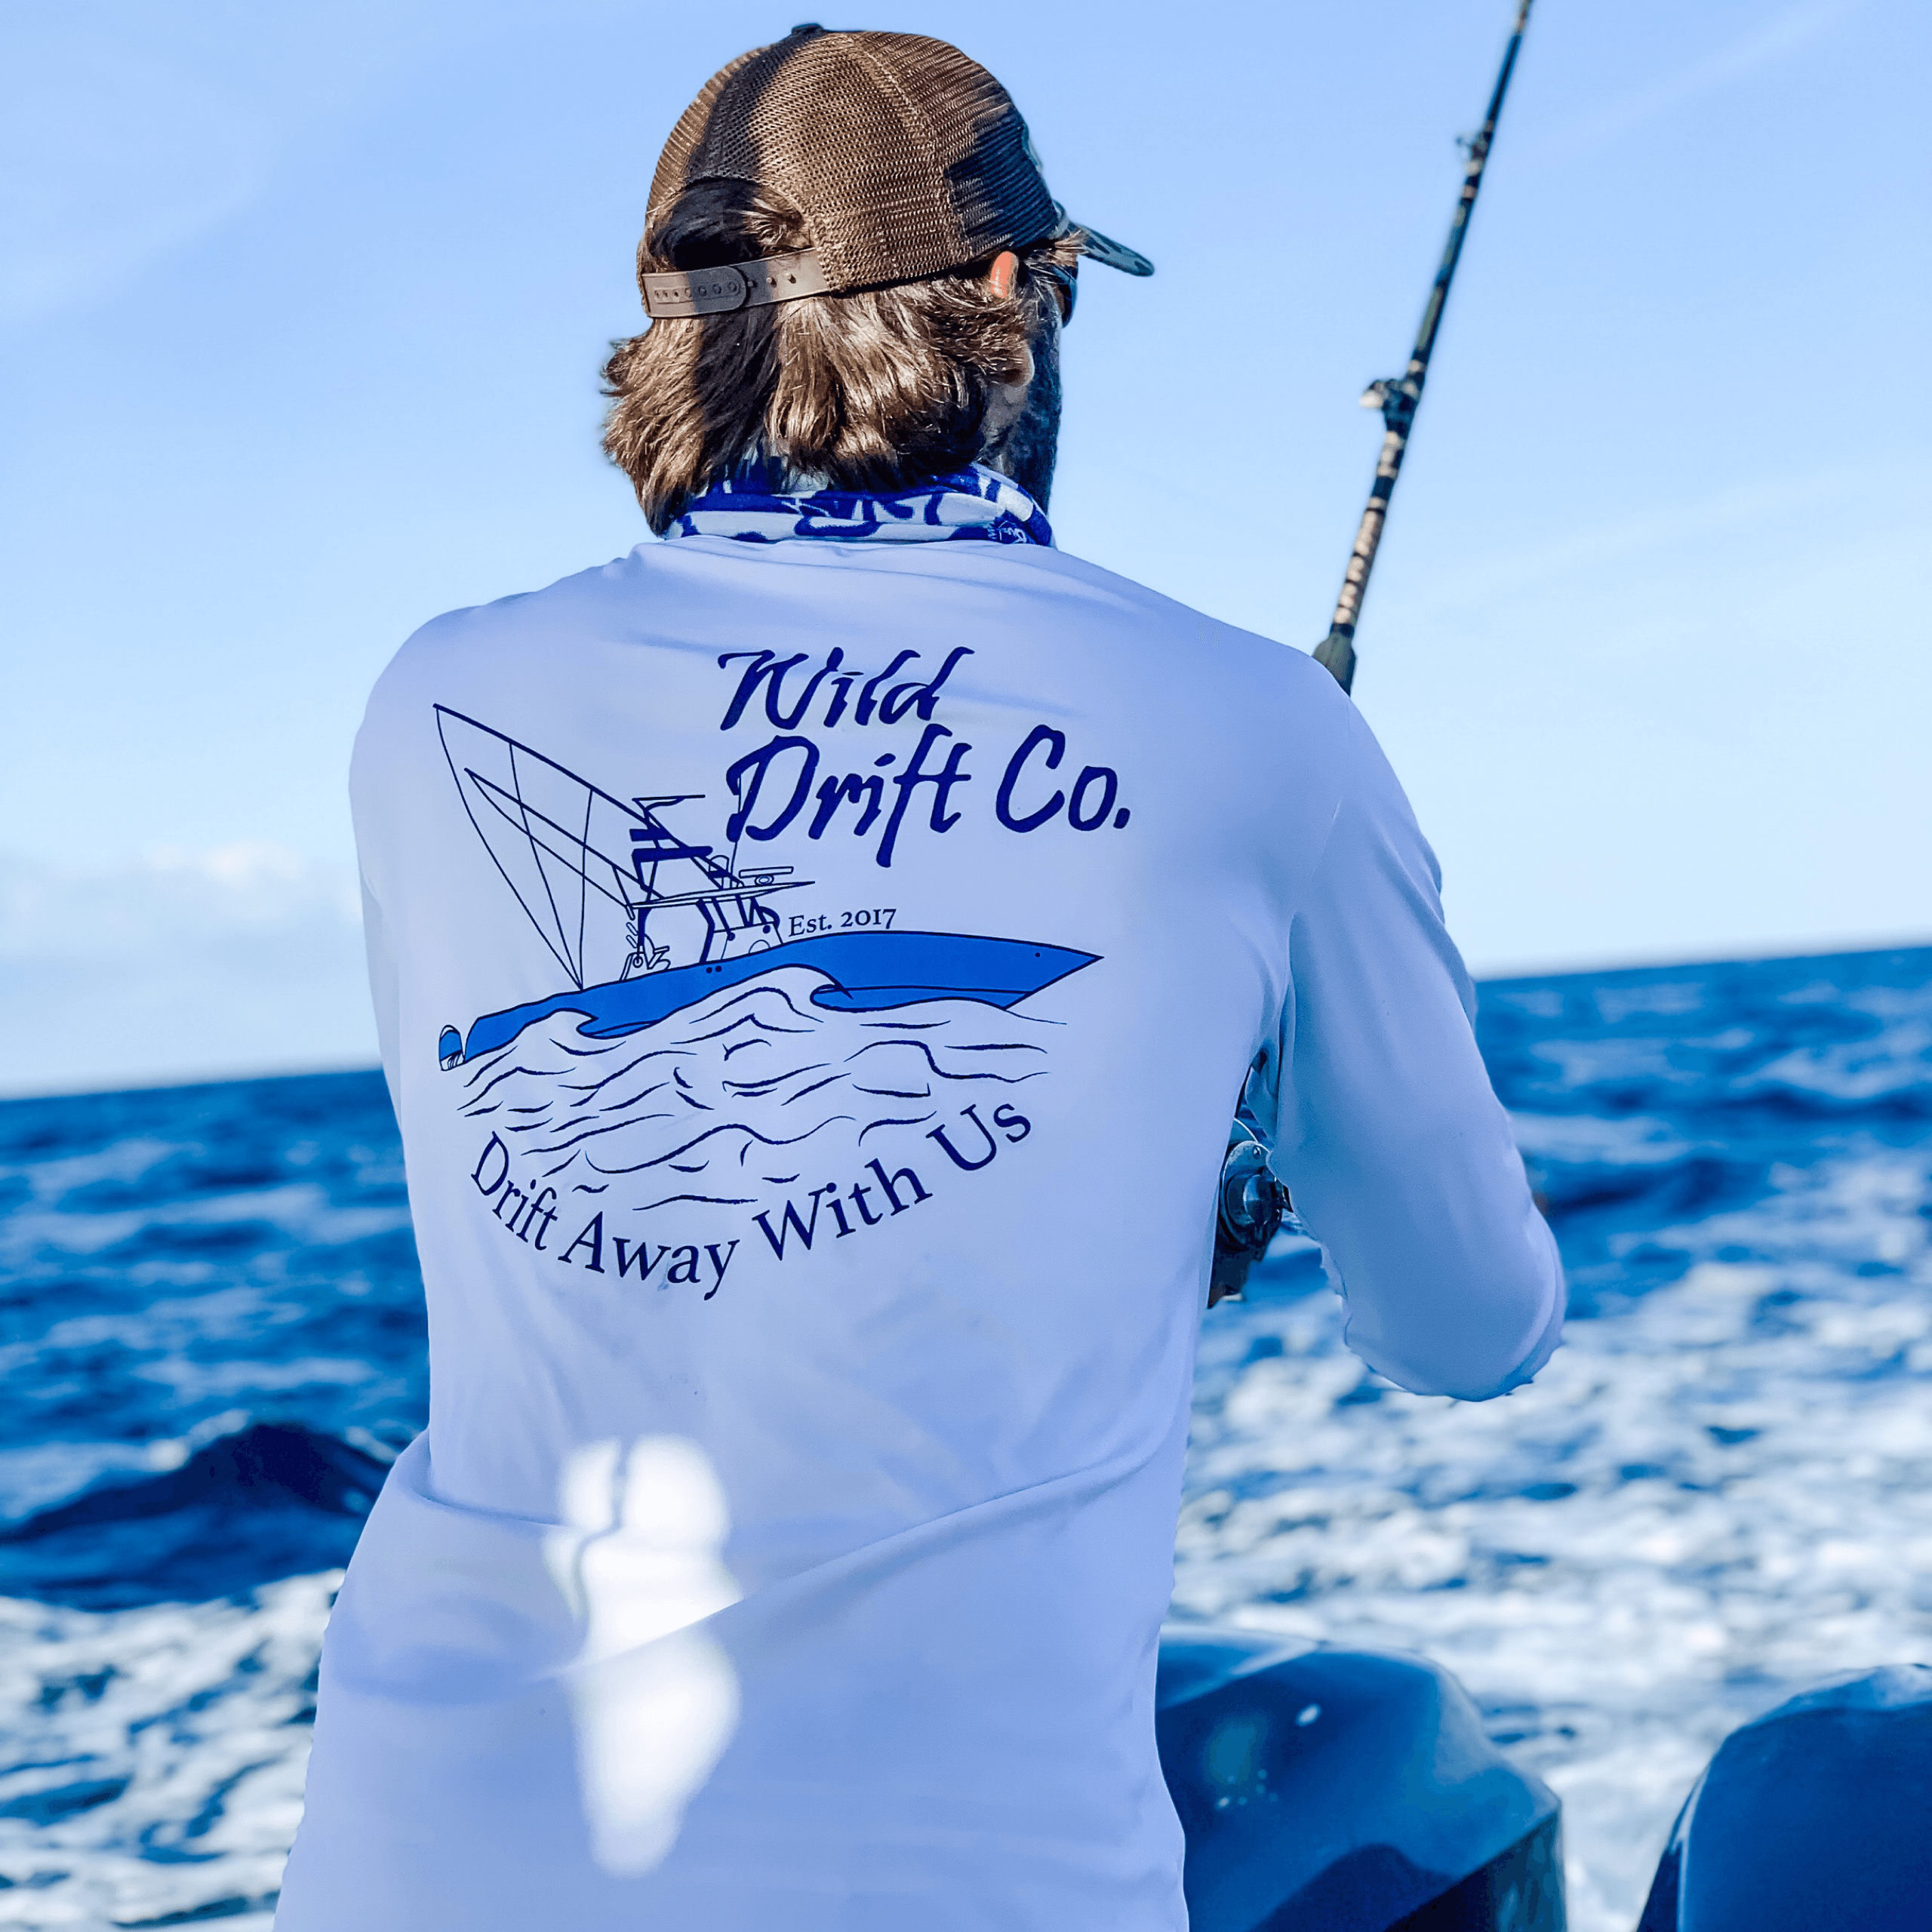 WDC White Performance Fishing Shirt